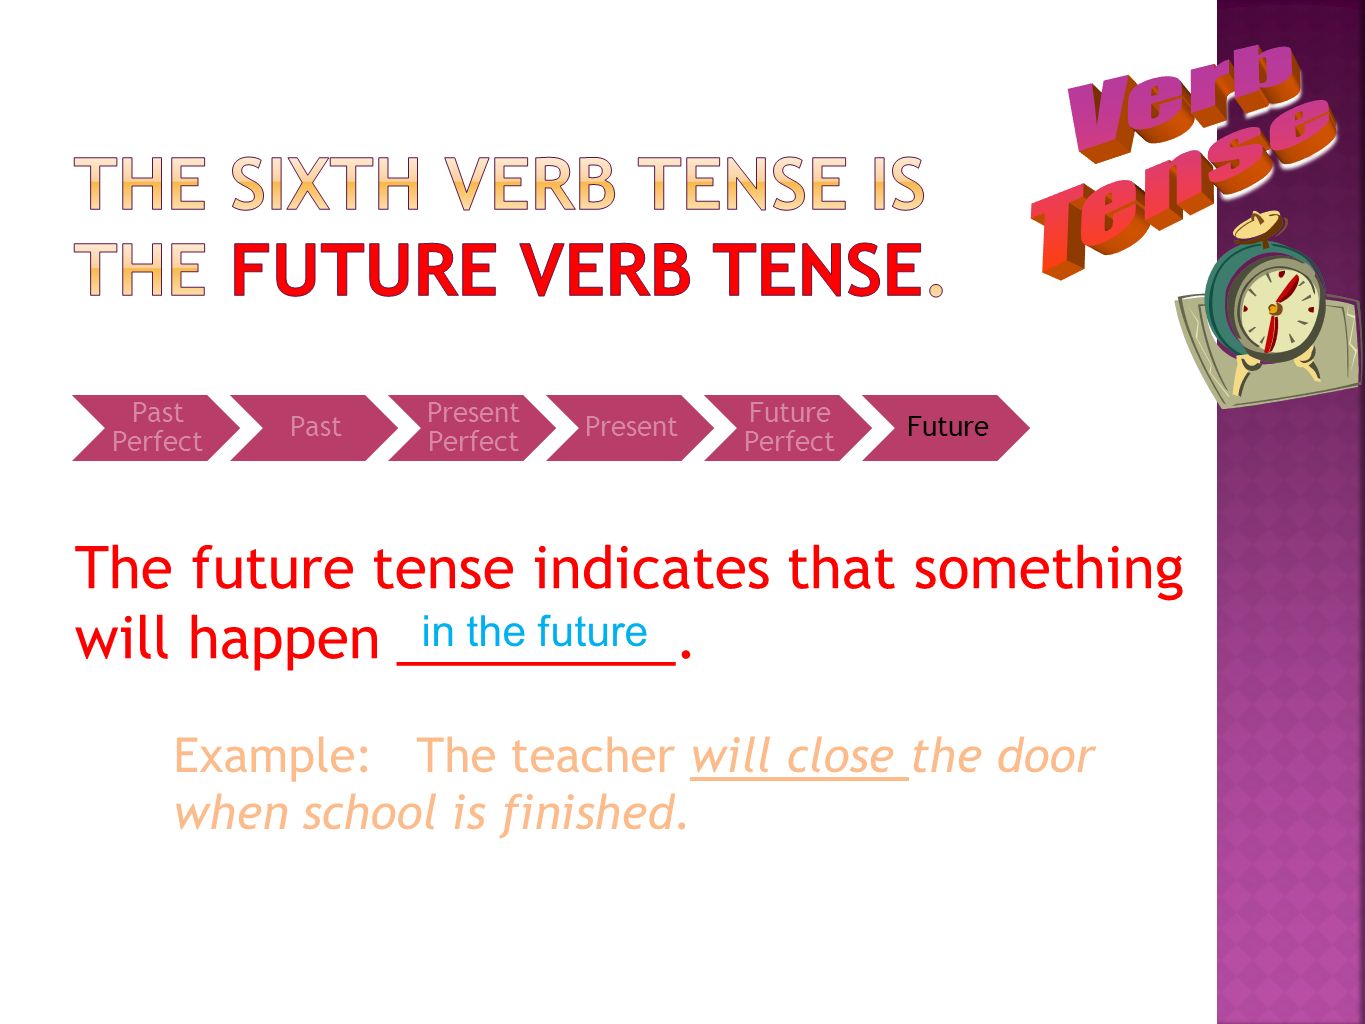 The sixth verb tense is the future verb tense.